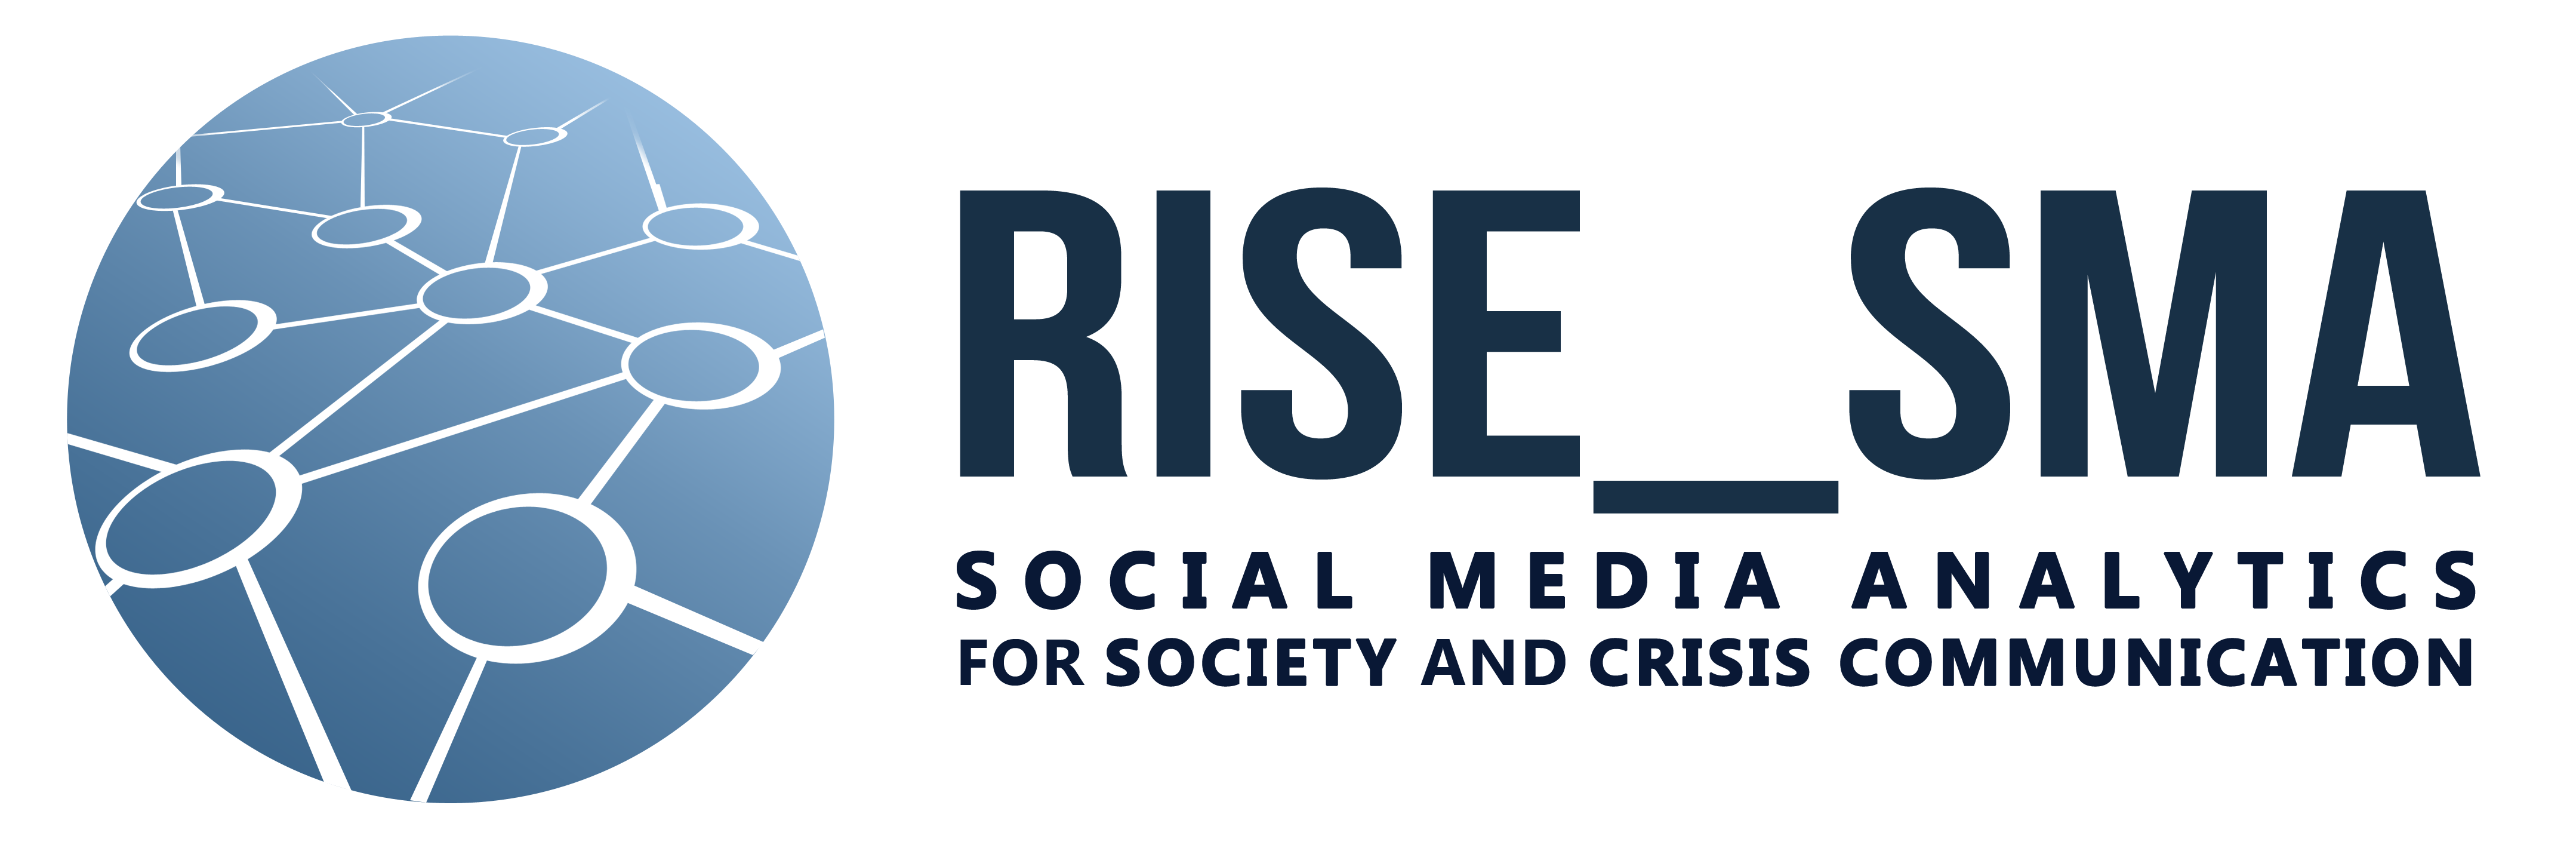 Rise_SMA logo